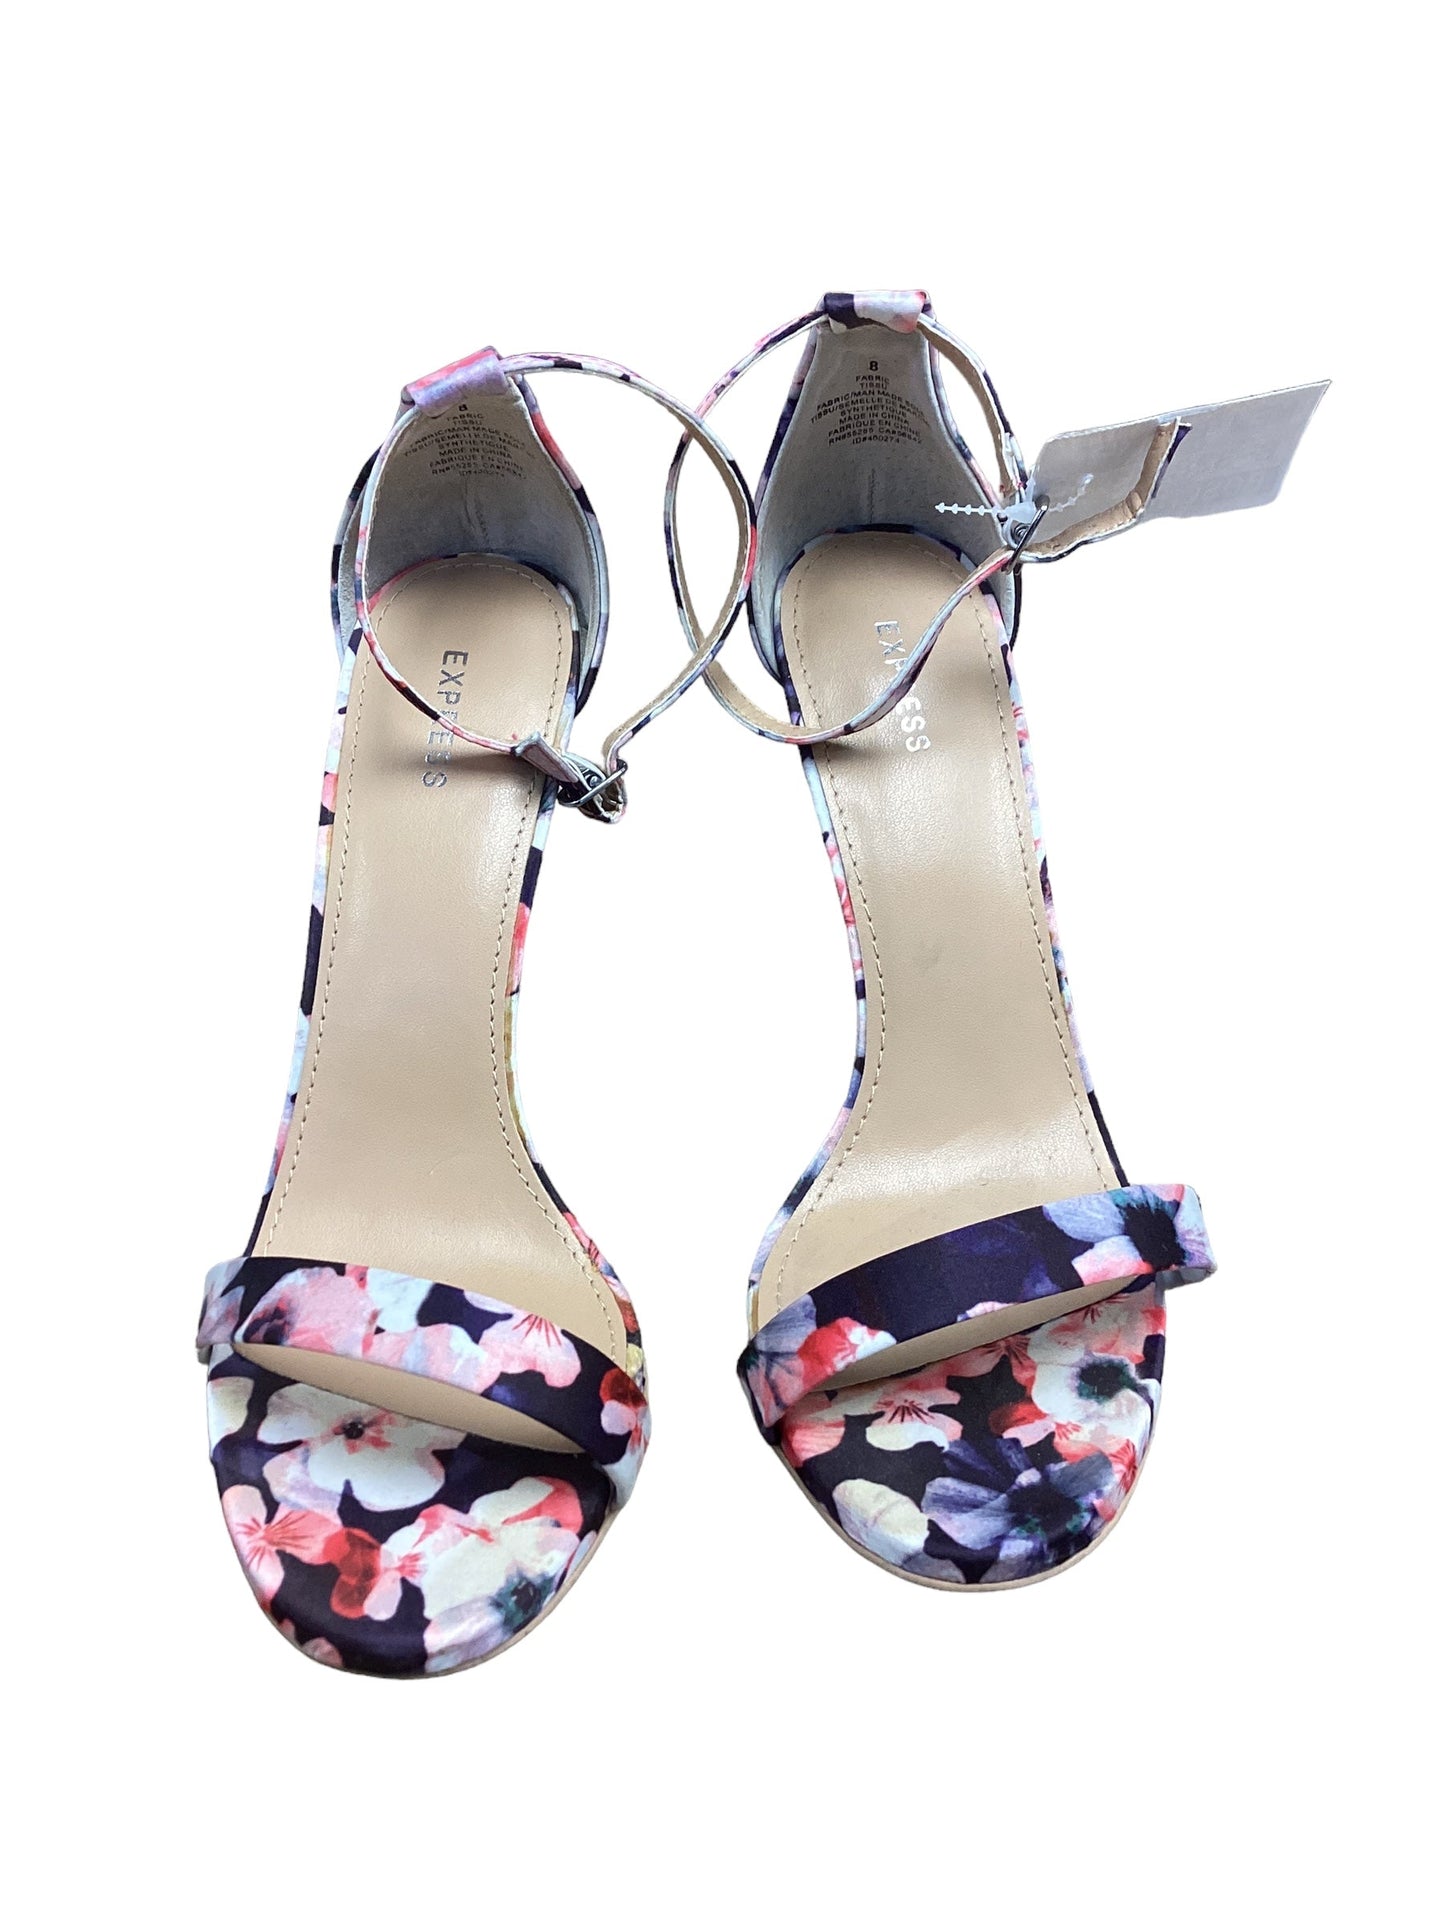 Floral Print Sandals Heels Stiletto Express, Size 8